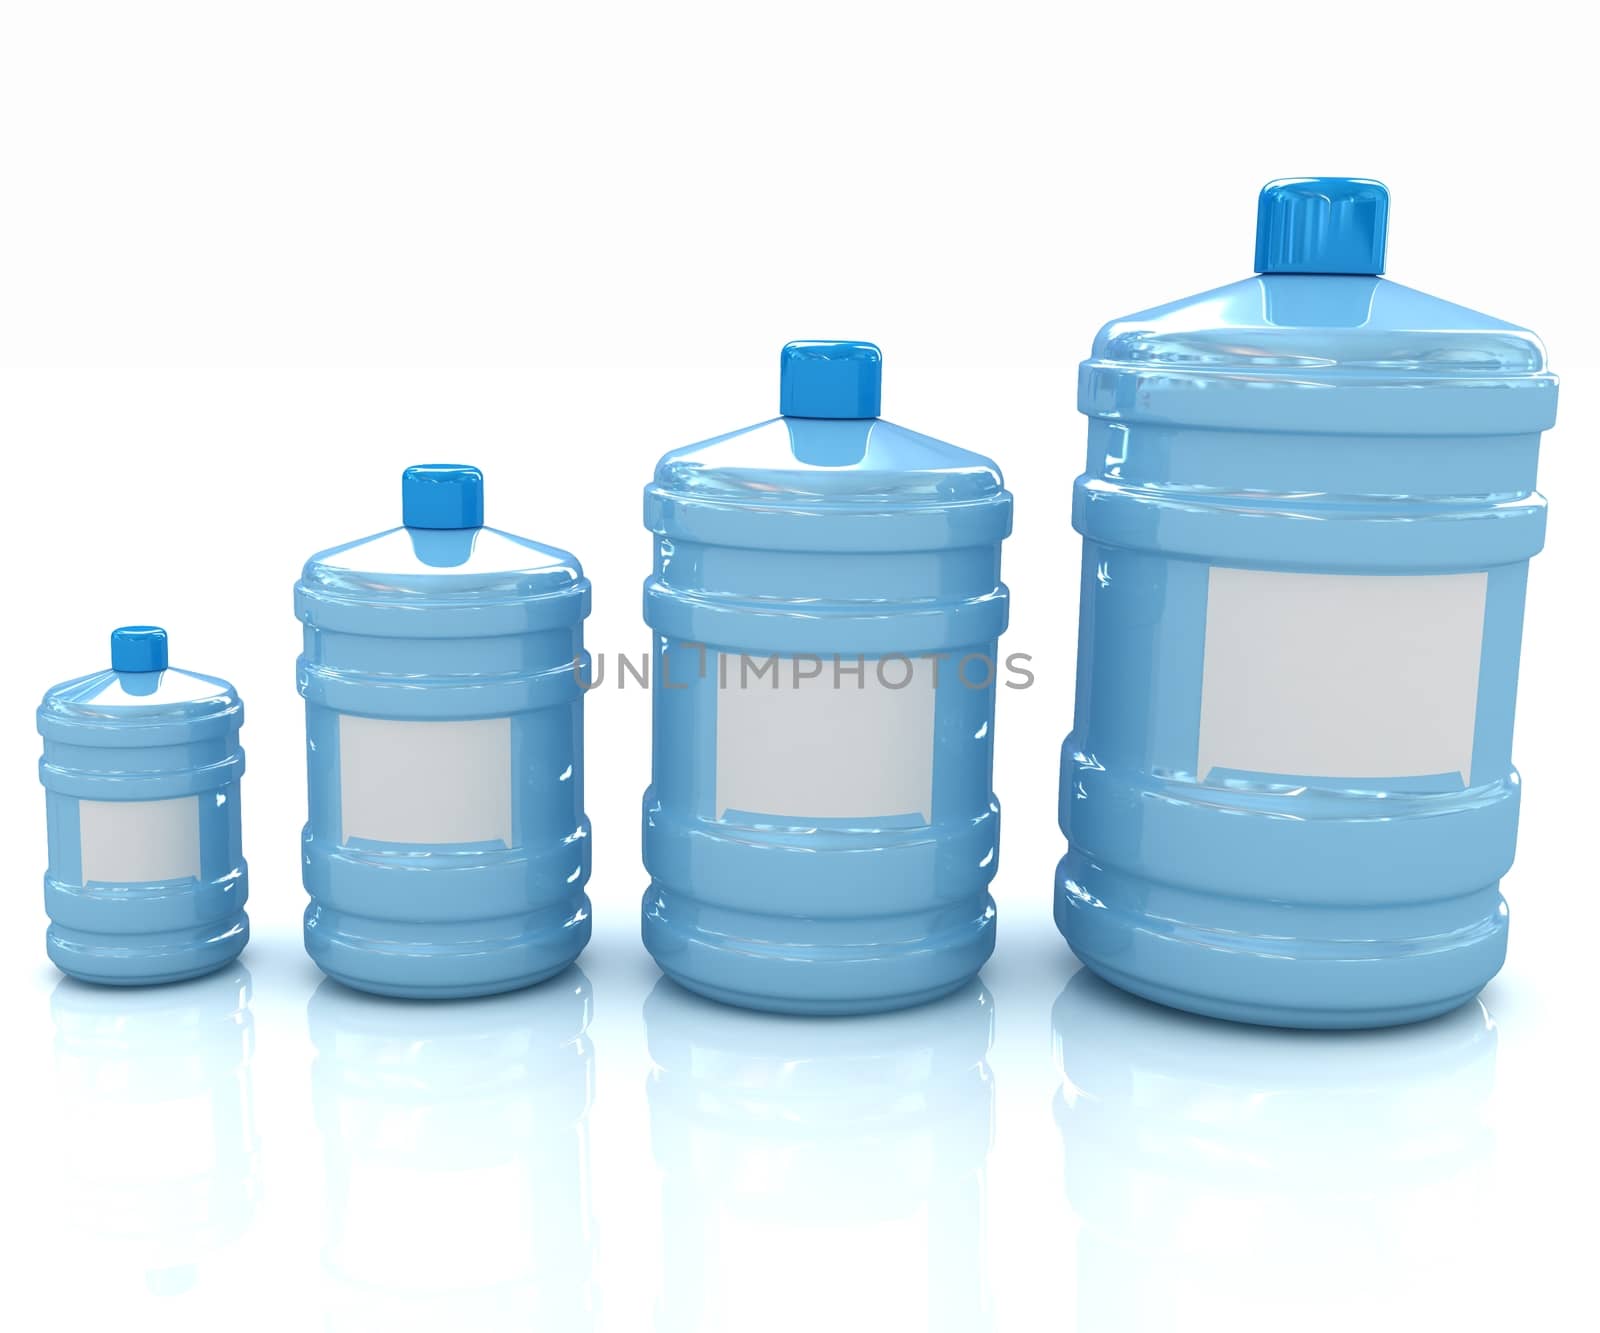 water bottles by Guru3D